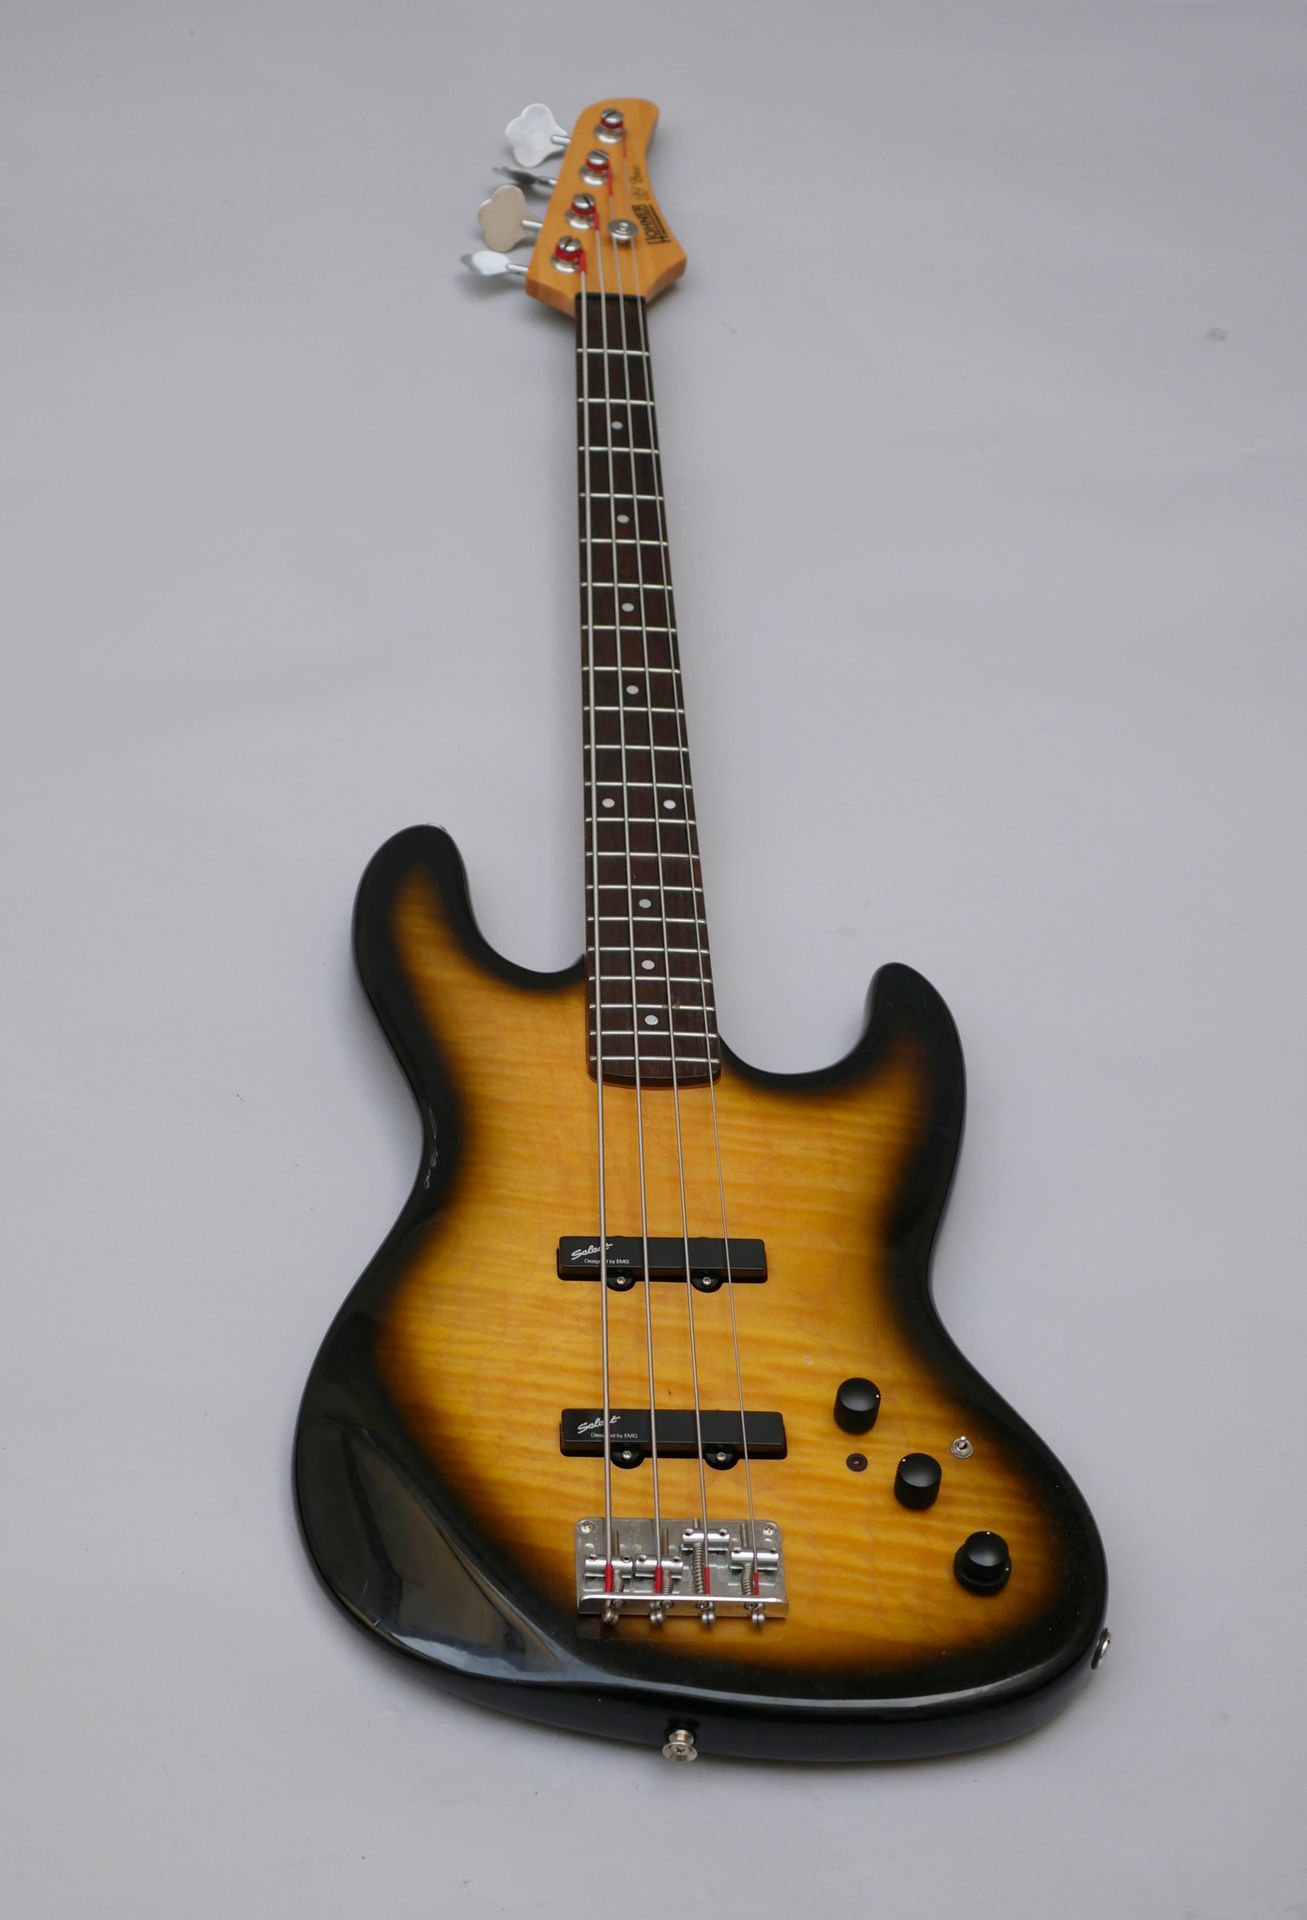 Null 实体的Hohner专业电贝斯吉他。

使用痕迹，案例。

(电子元件未测试)